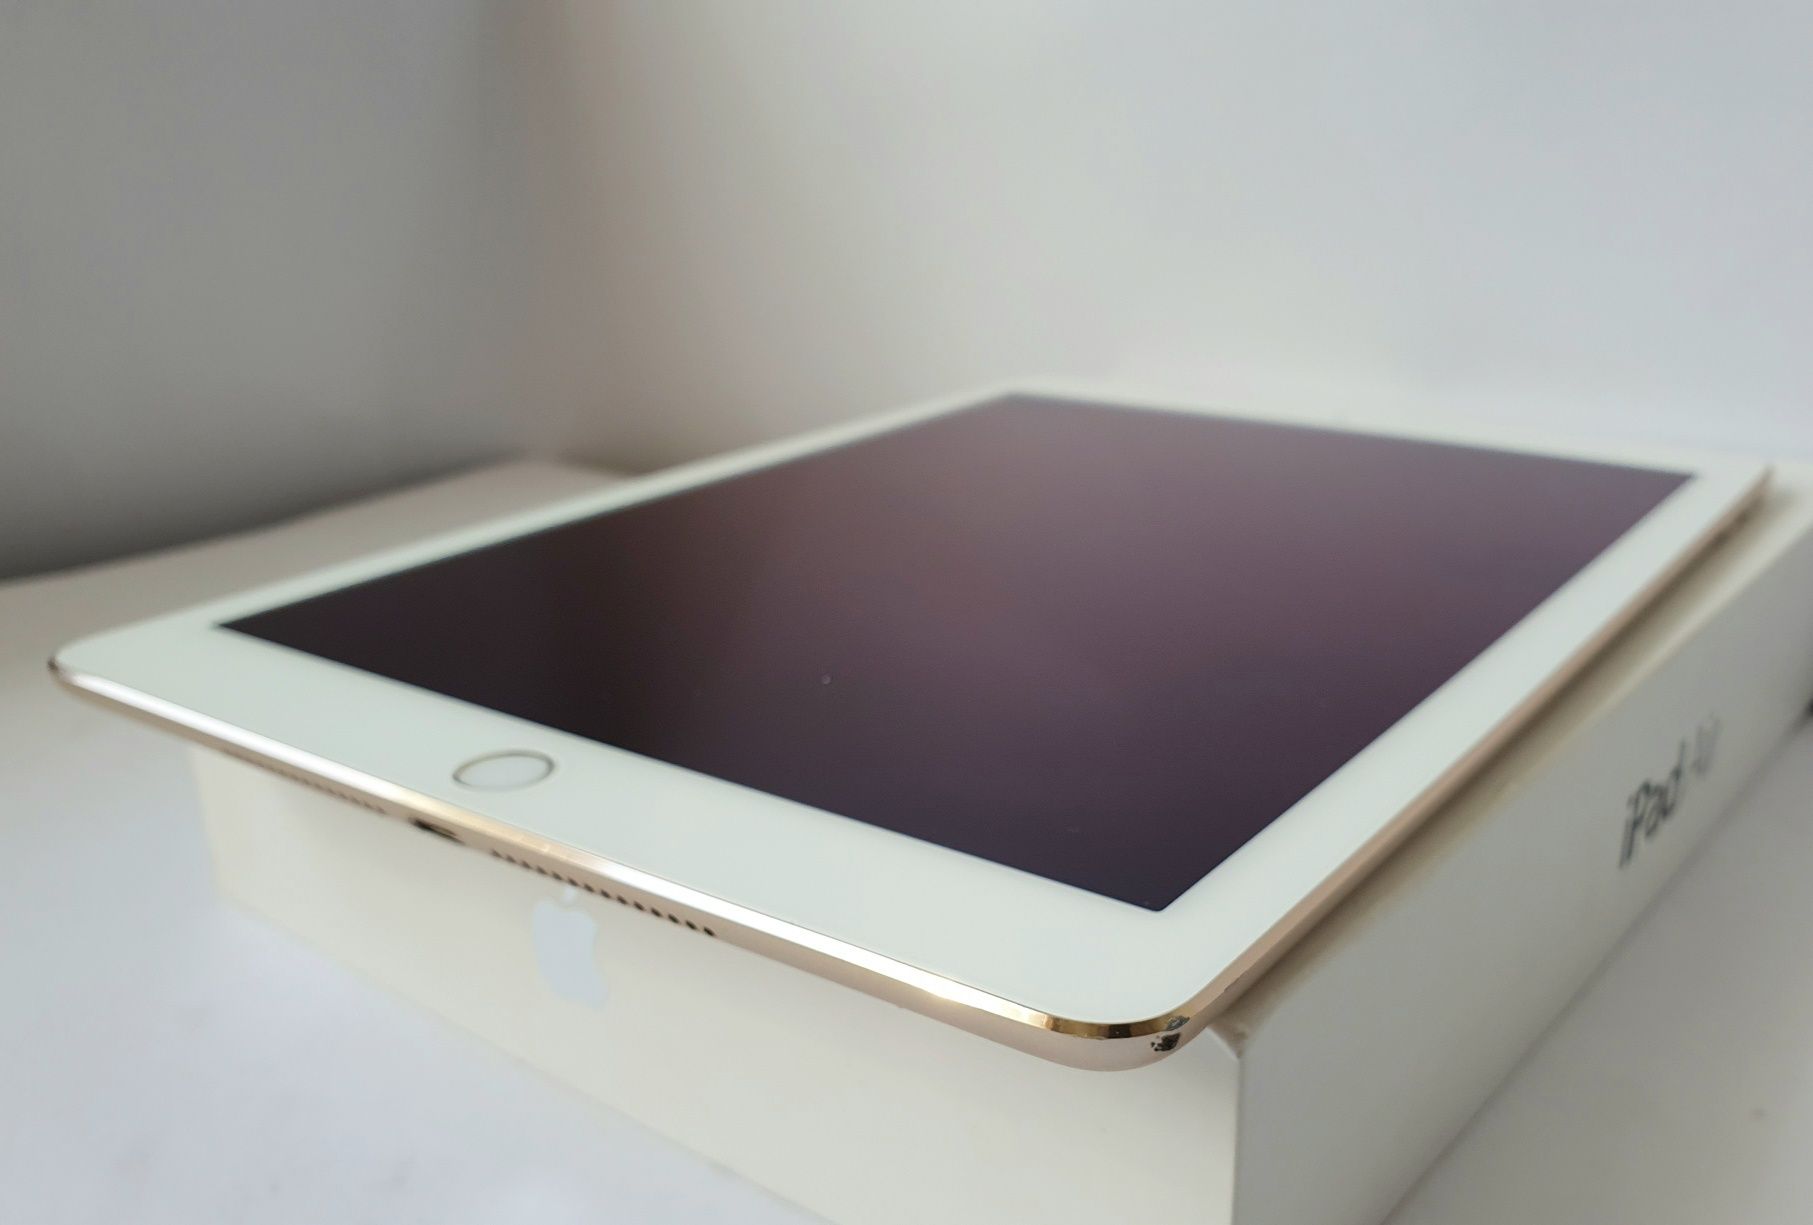 iPad Air2 16GB wifi A1566 Gold під ремонт на запчастини читайте опис!